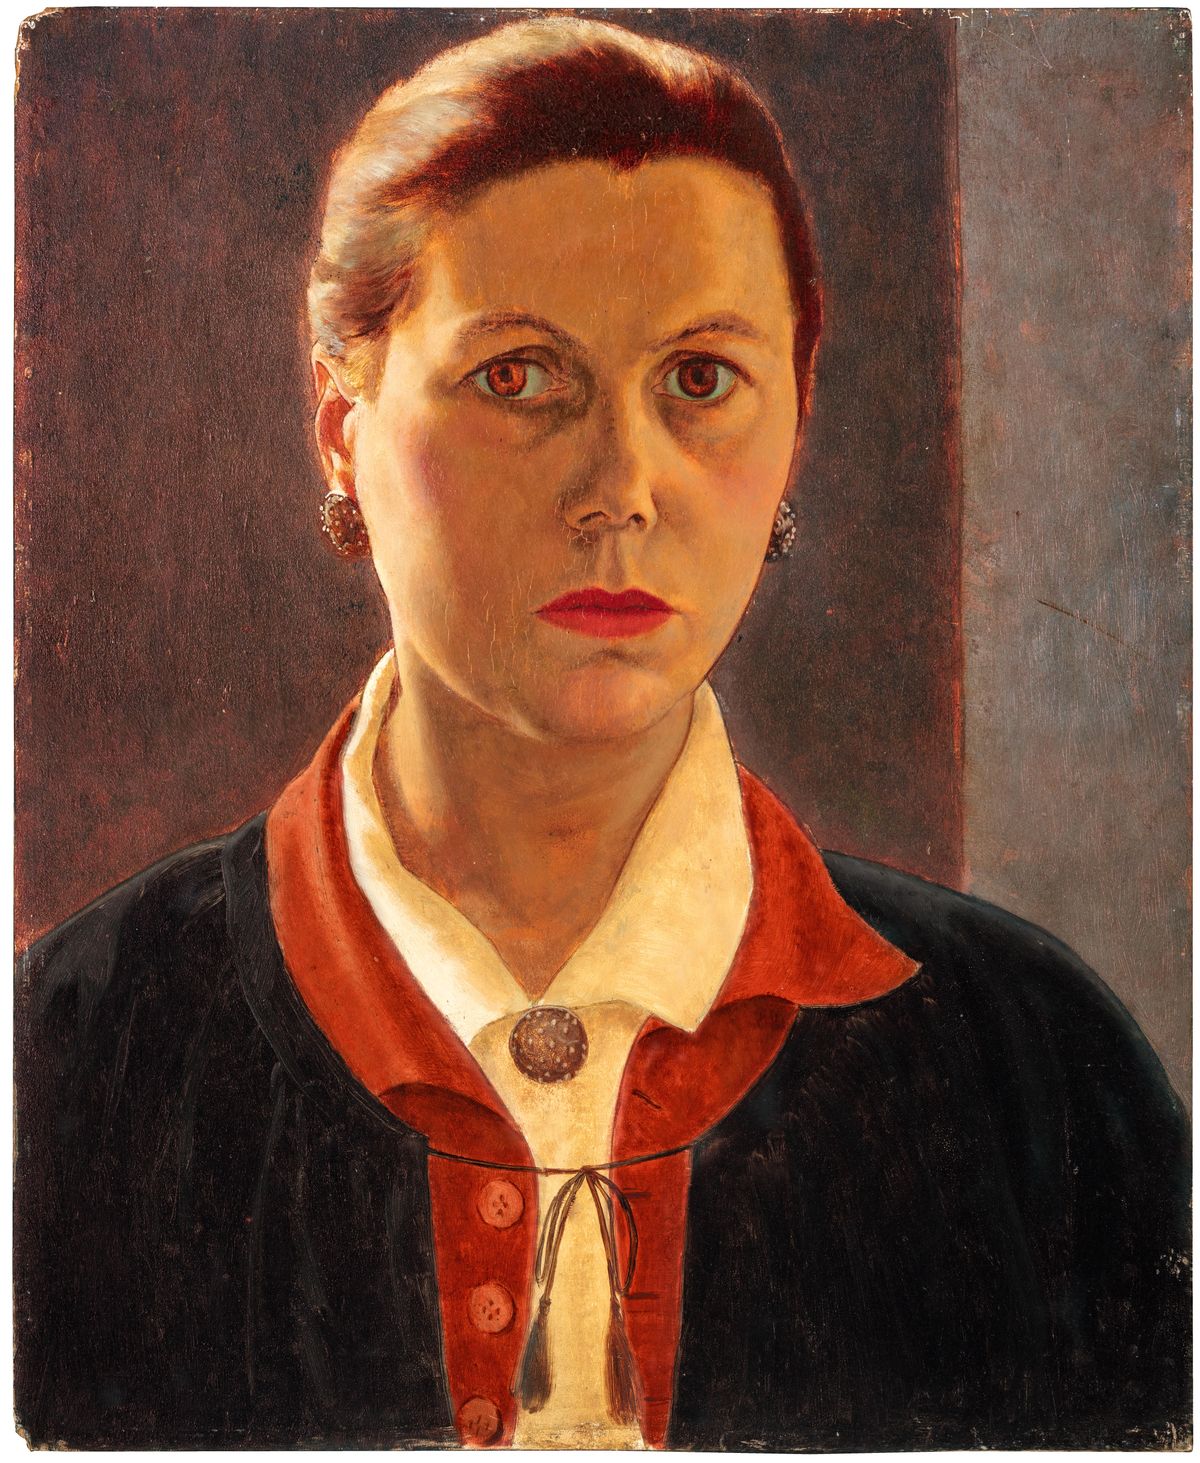 Стелла Боуэн - 16 мая 1893 - 30 октября 1947